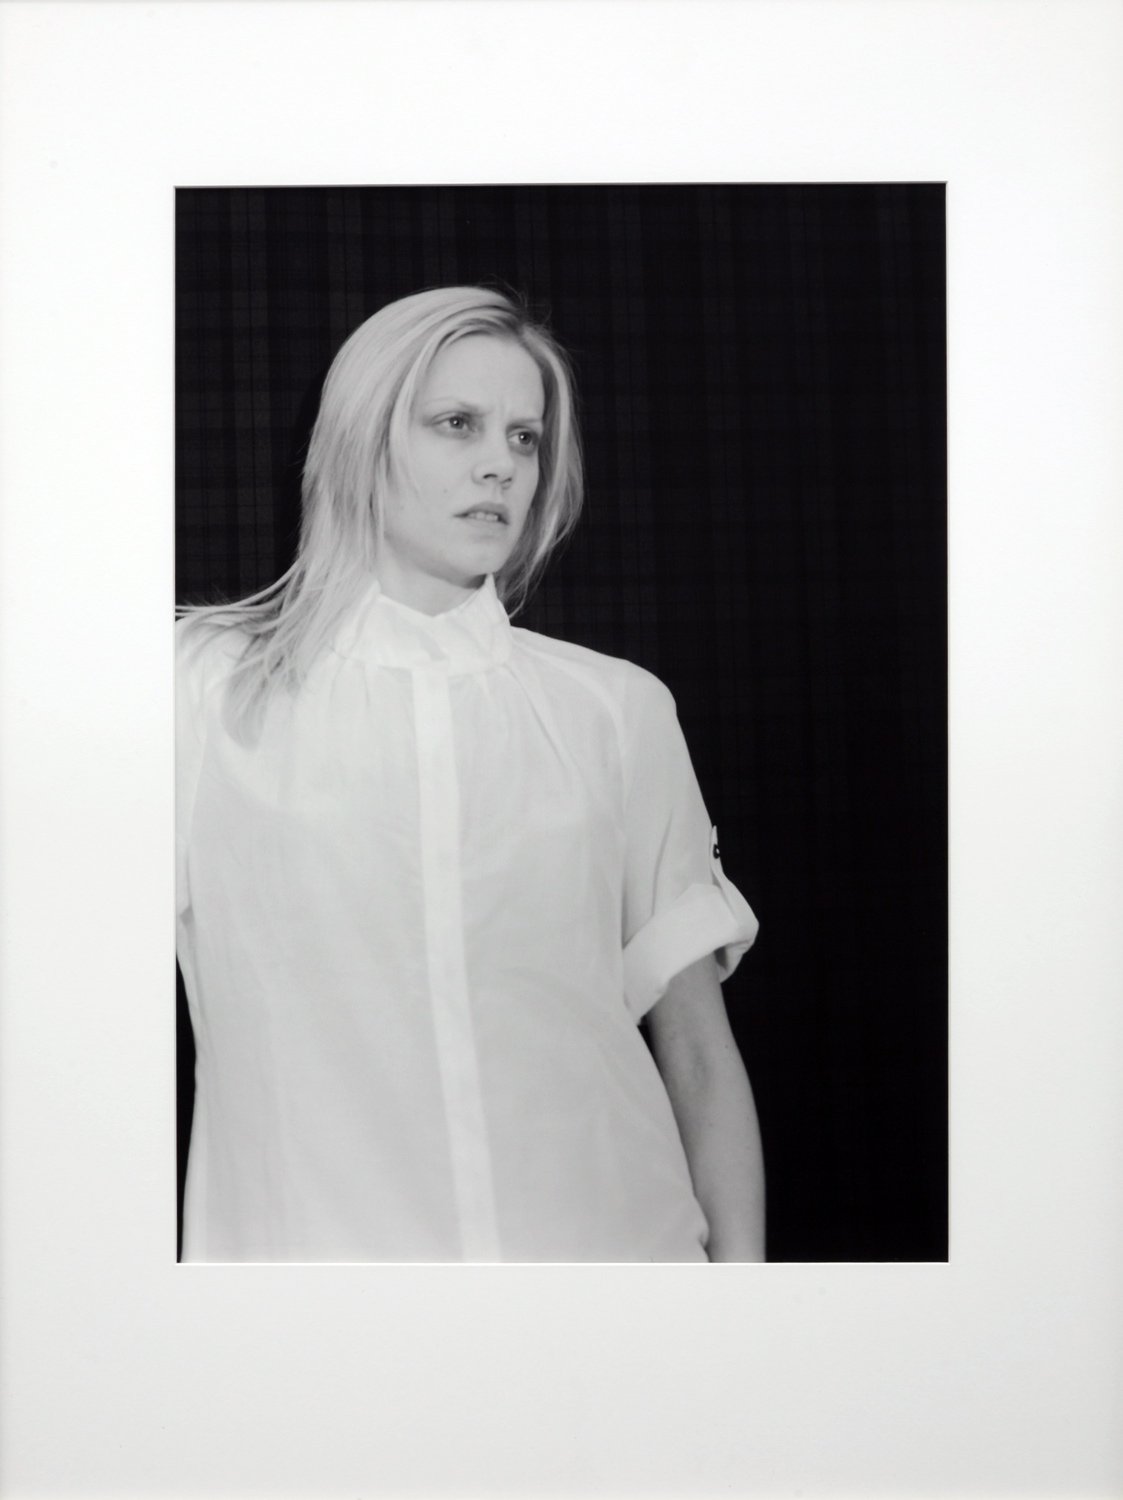 Josephine PrydeSelf-doubt, 2007-2009Silber gelatin print48.5 x 35 cm